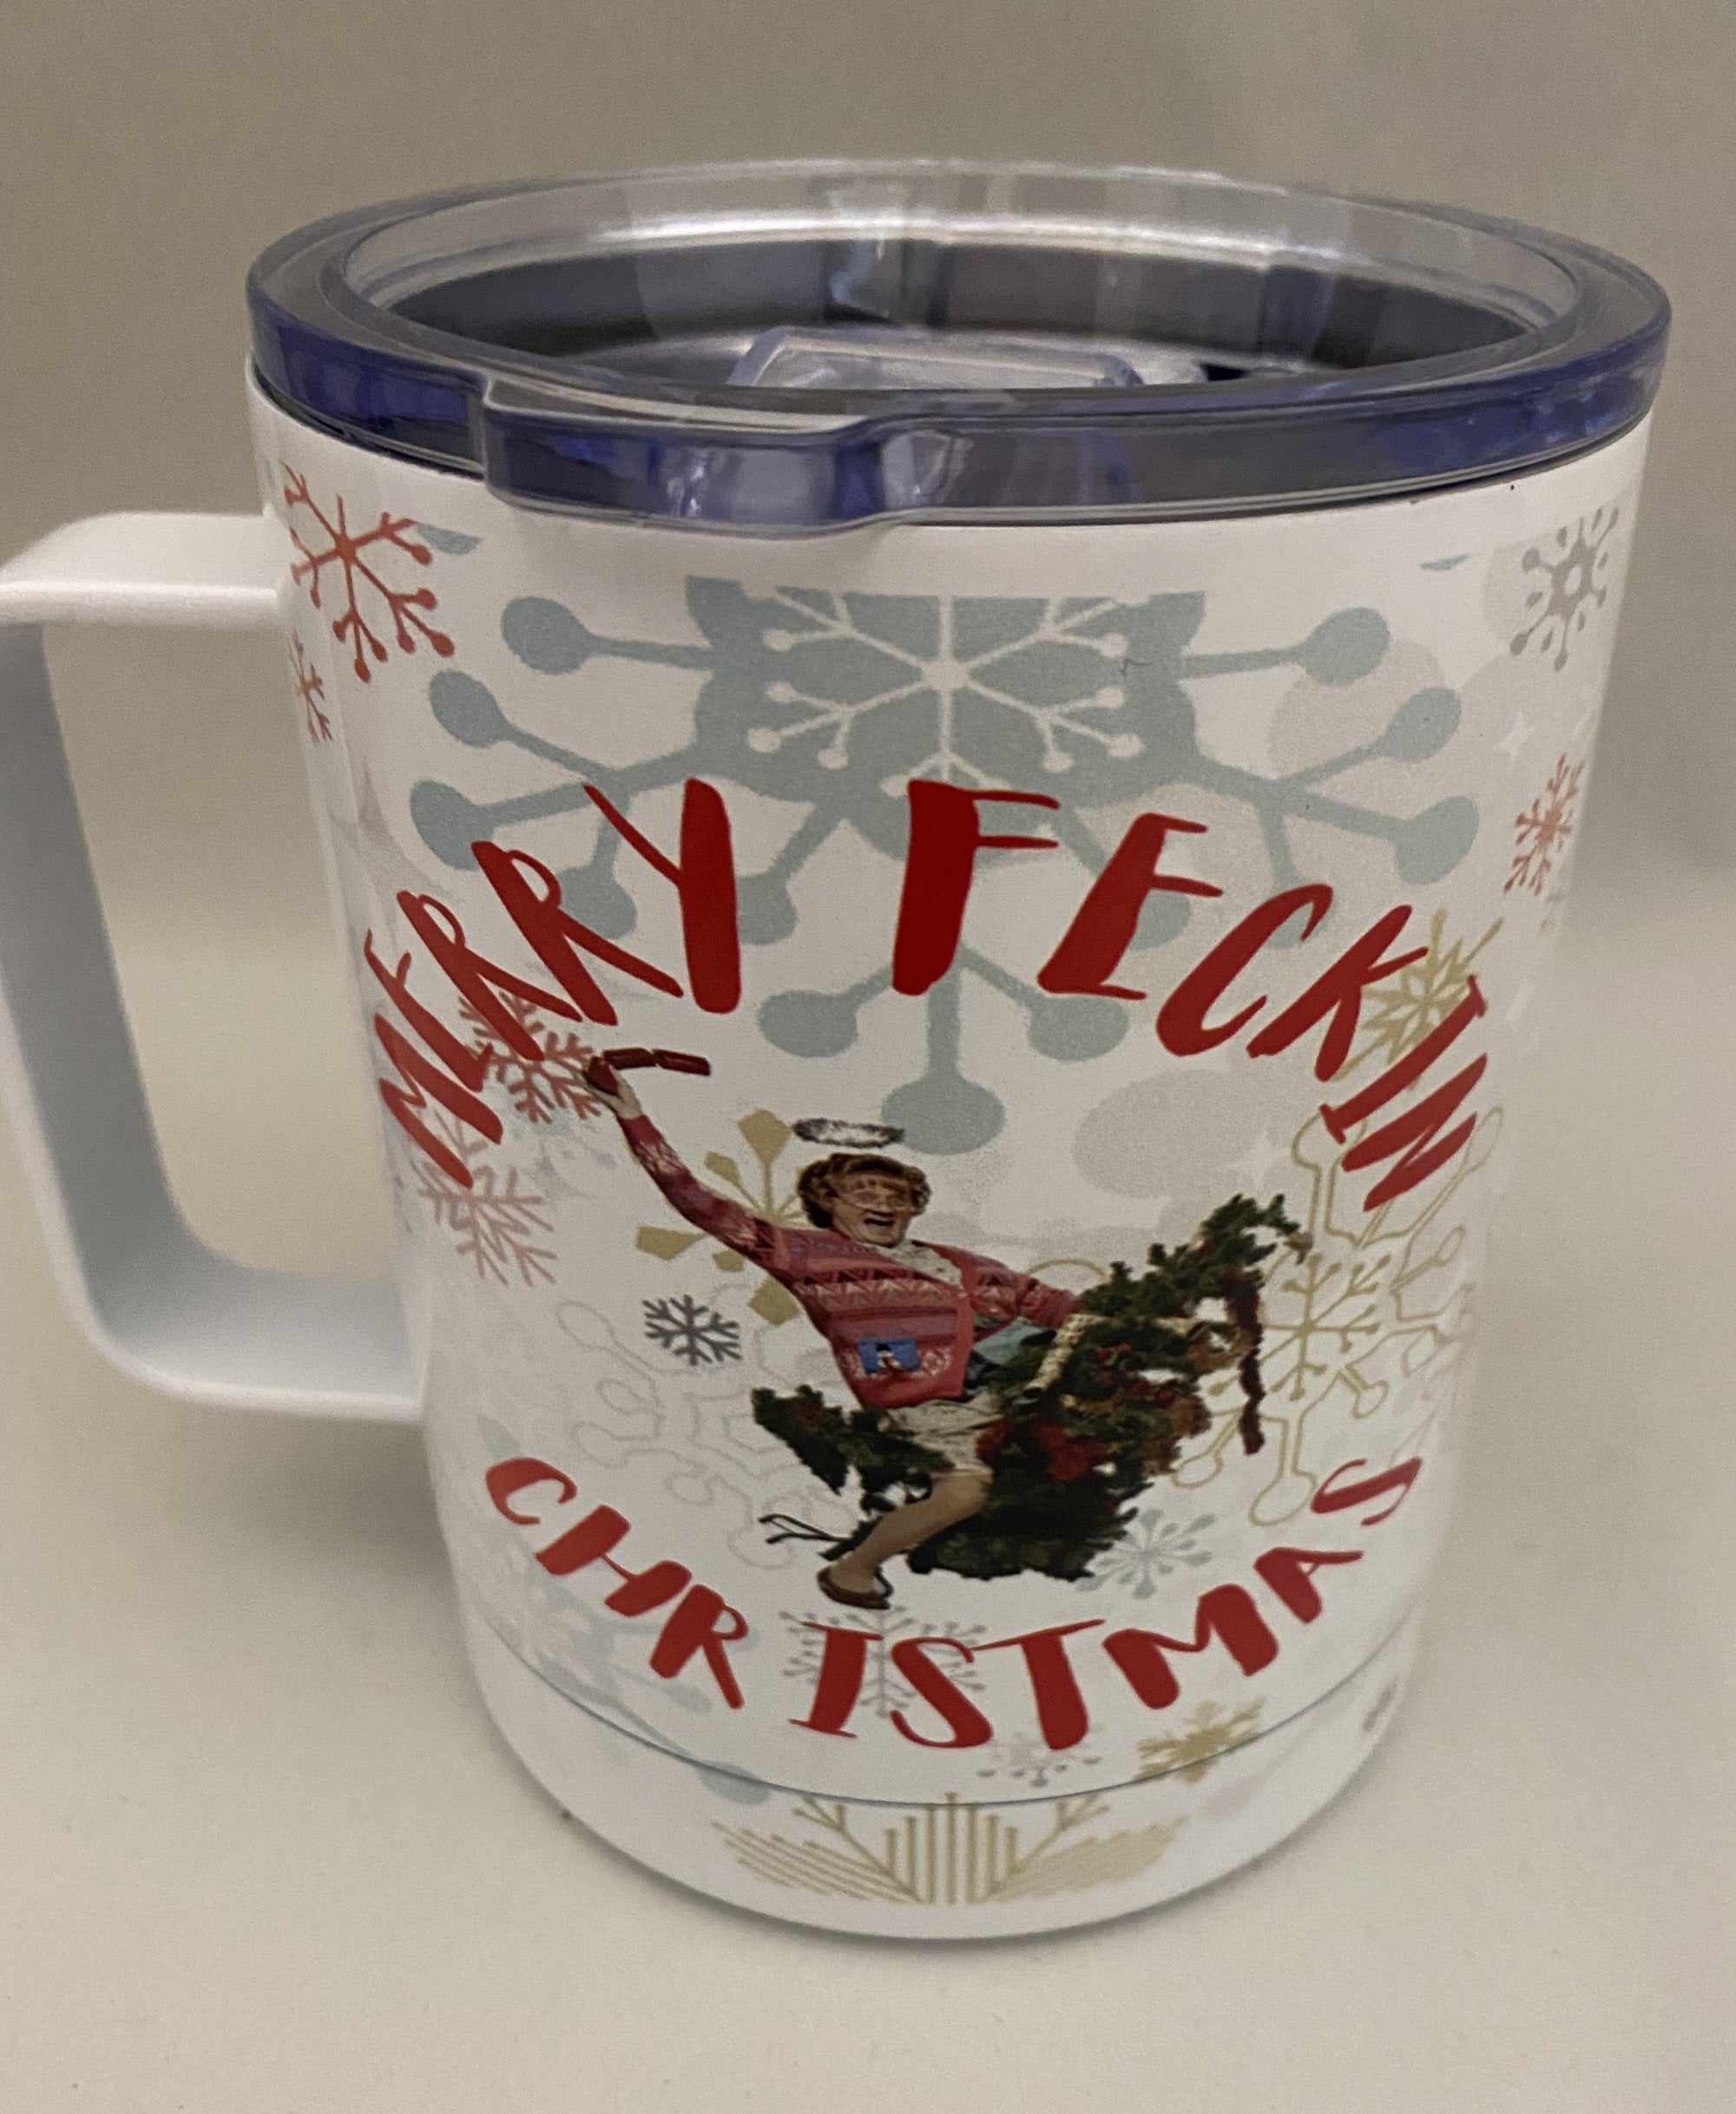 Scotadian Merry Feckin Christmas Mug with Lid